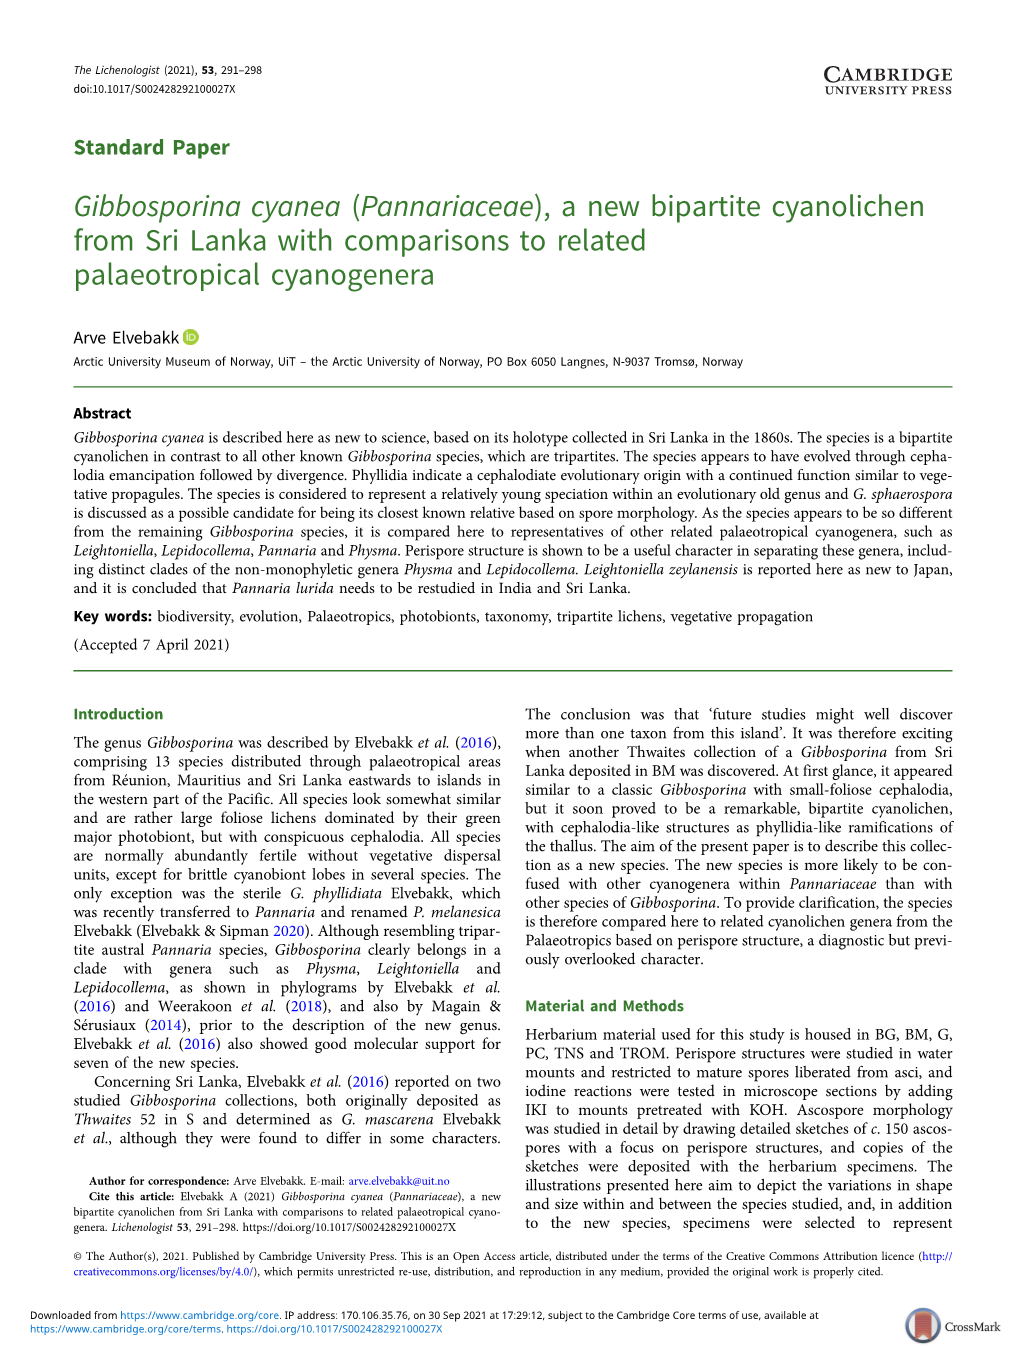 Gibbosporina Cyanea (Pannariaceae), a New Bipartite Cyanolichen from Sri Lanka with Comparisons to Related Palaeotropical Cyanogenera